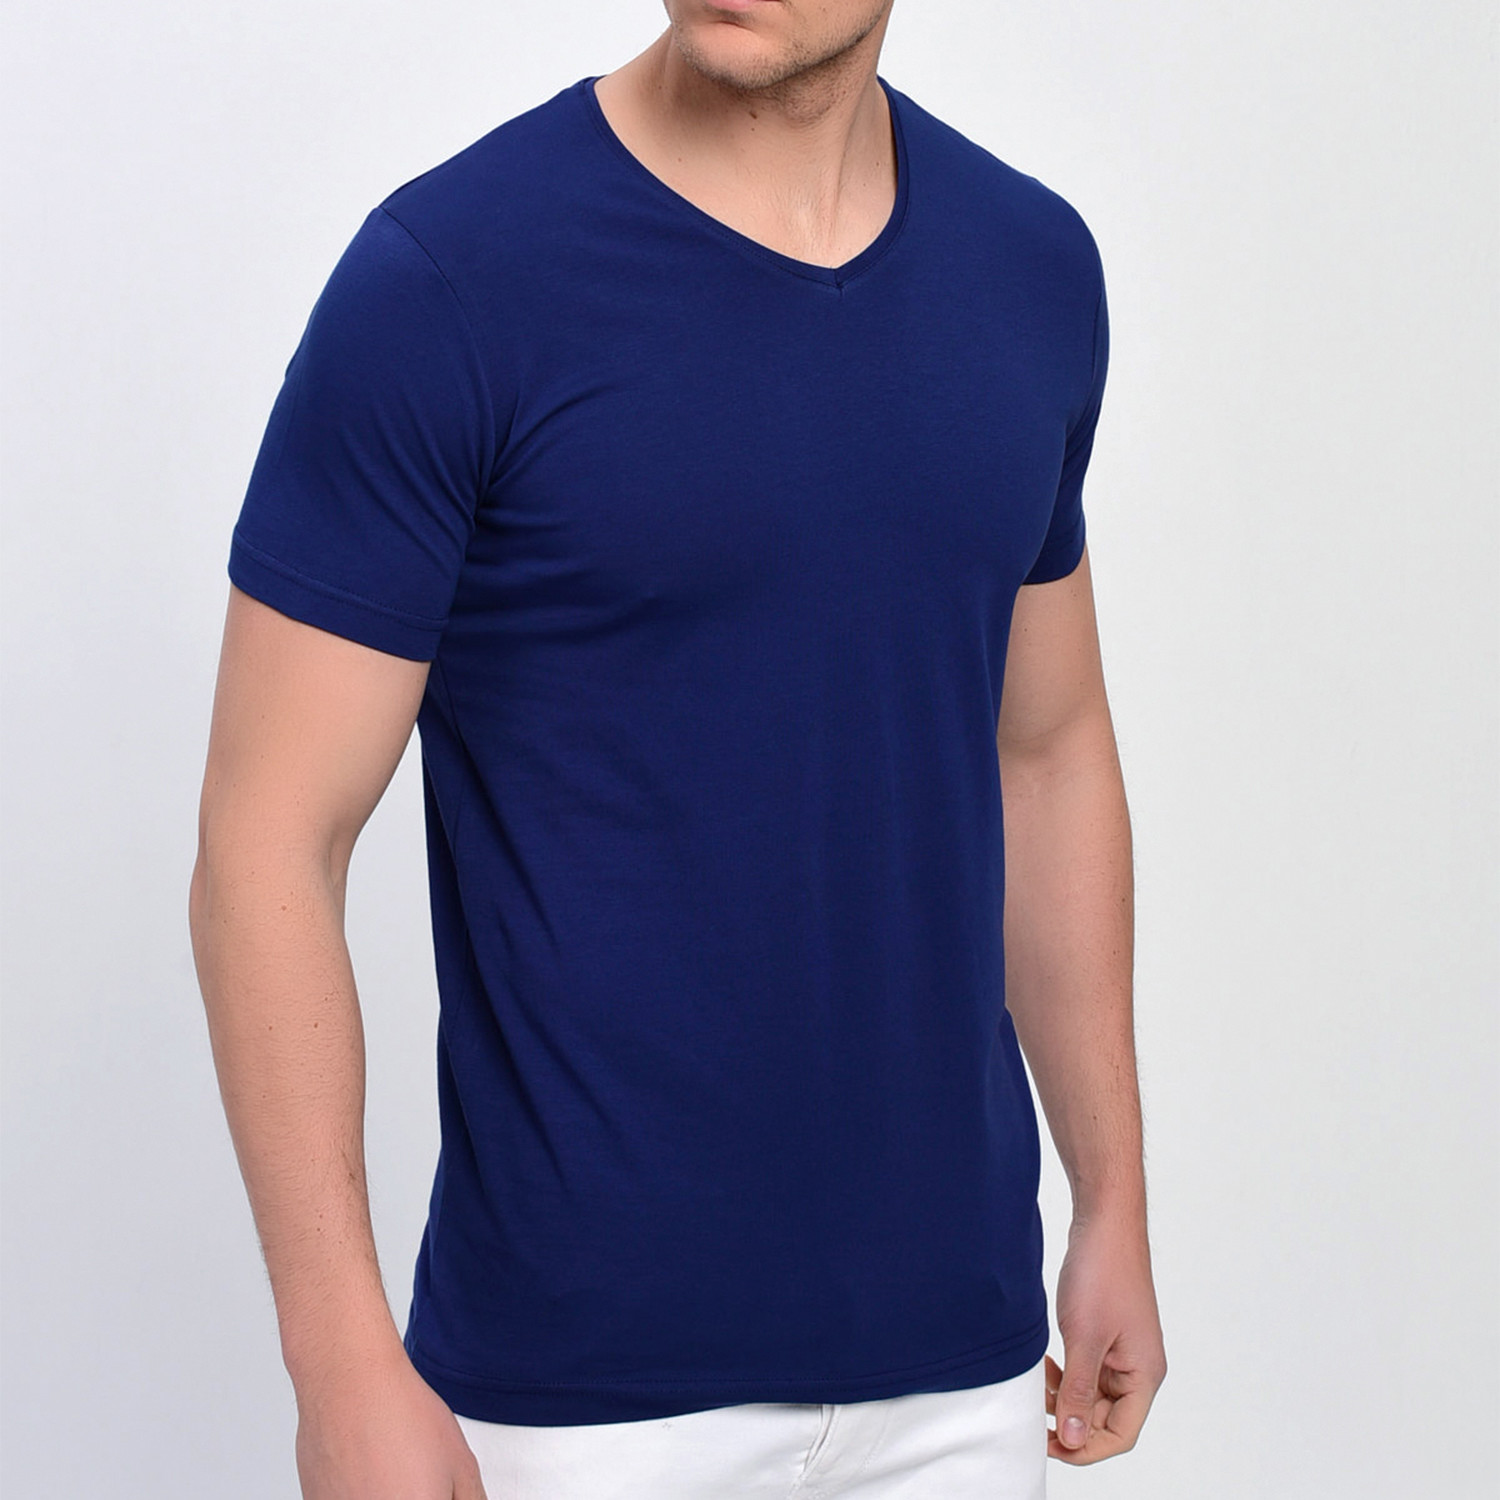 Milo T-Shirt // Navy Blue (M) - YASEMEN DIŞ TİCARET LTD. ŞTİ. - Touch ...